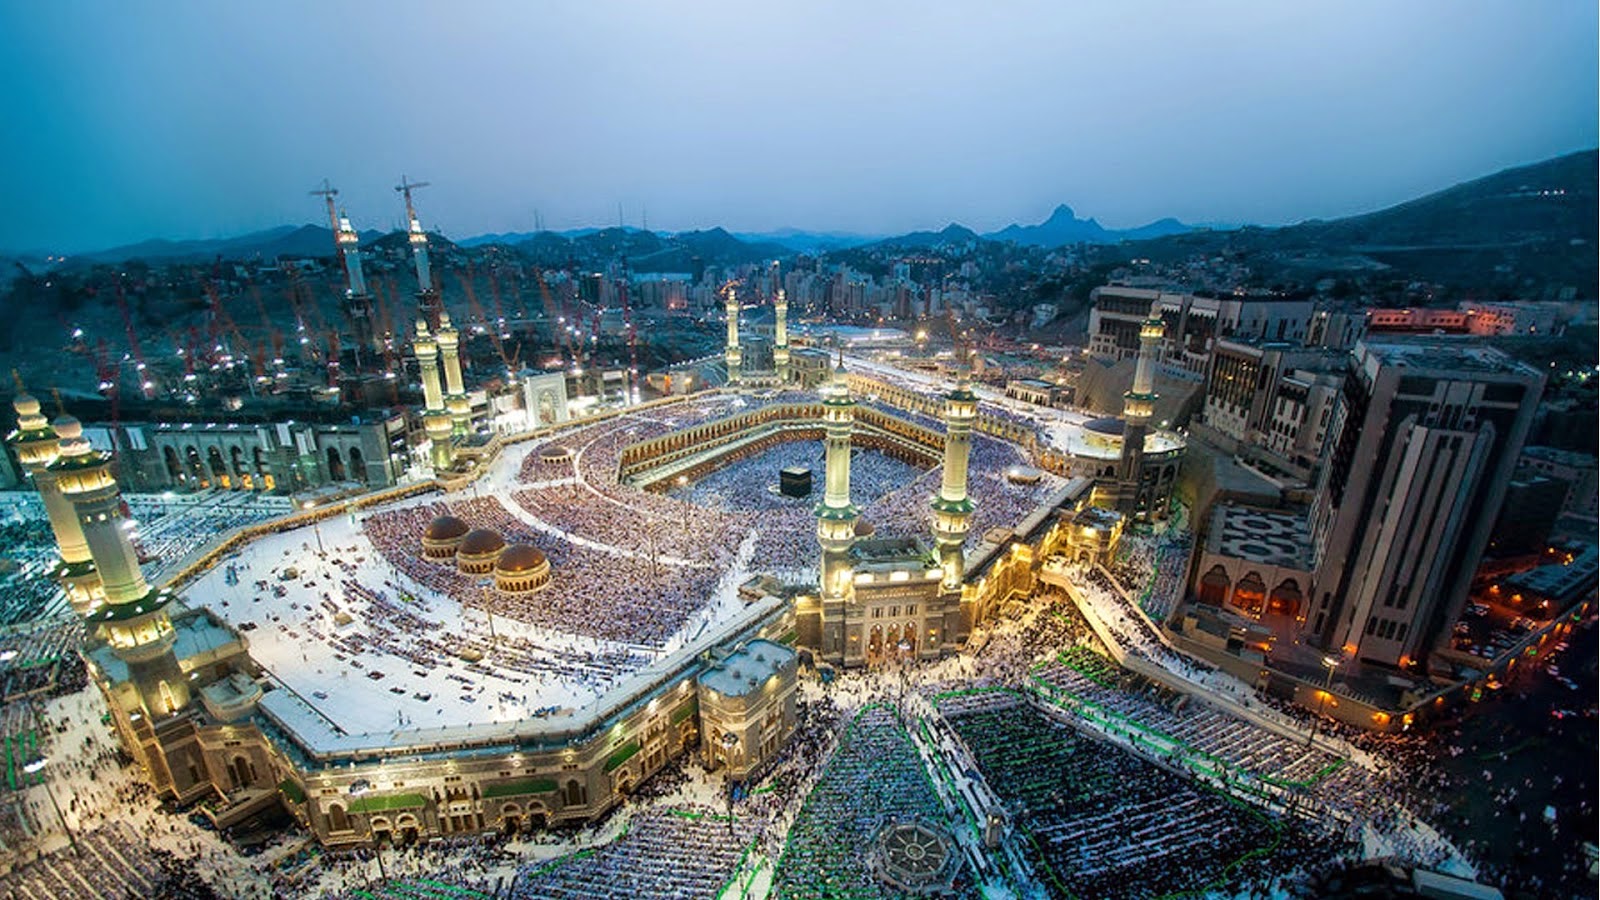 My Islam House - I Provide You Free Islamic Knowledge.: Makkah (Mecca